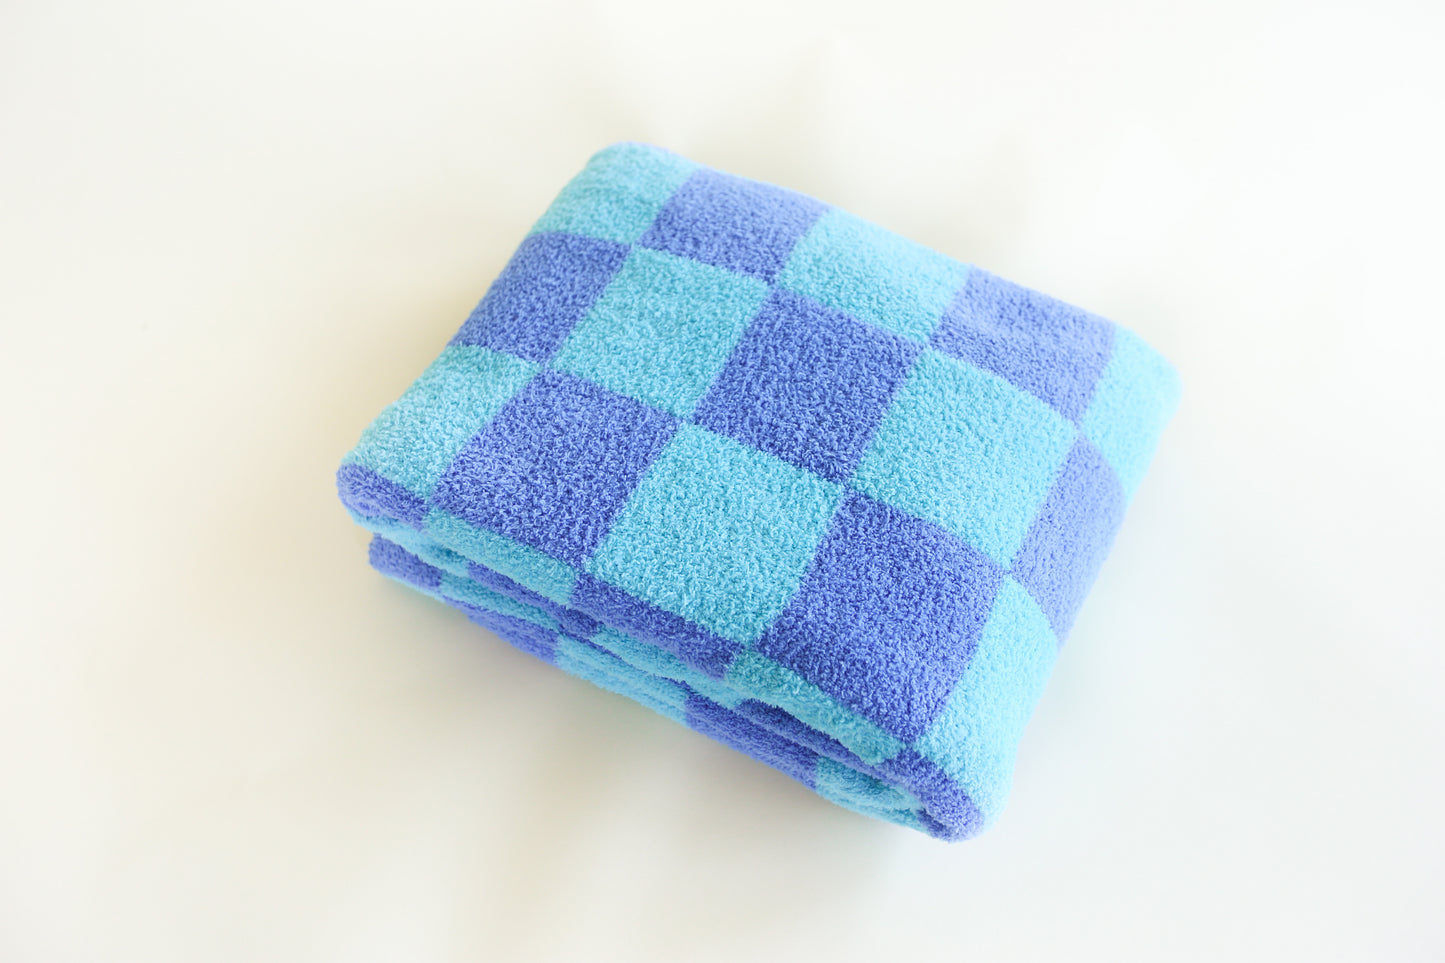 Blue Checkered Blanket